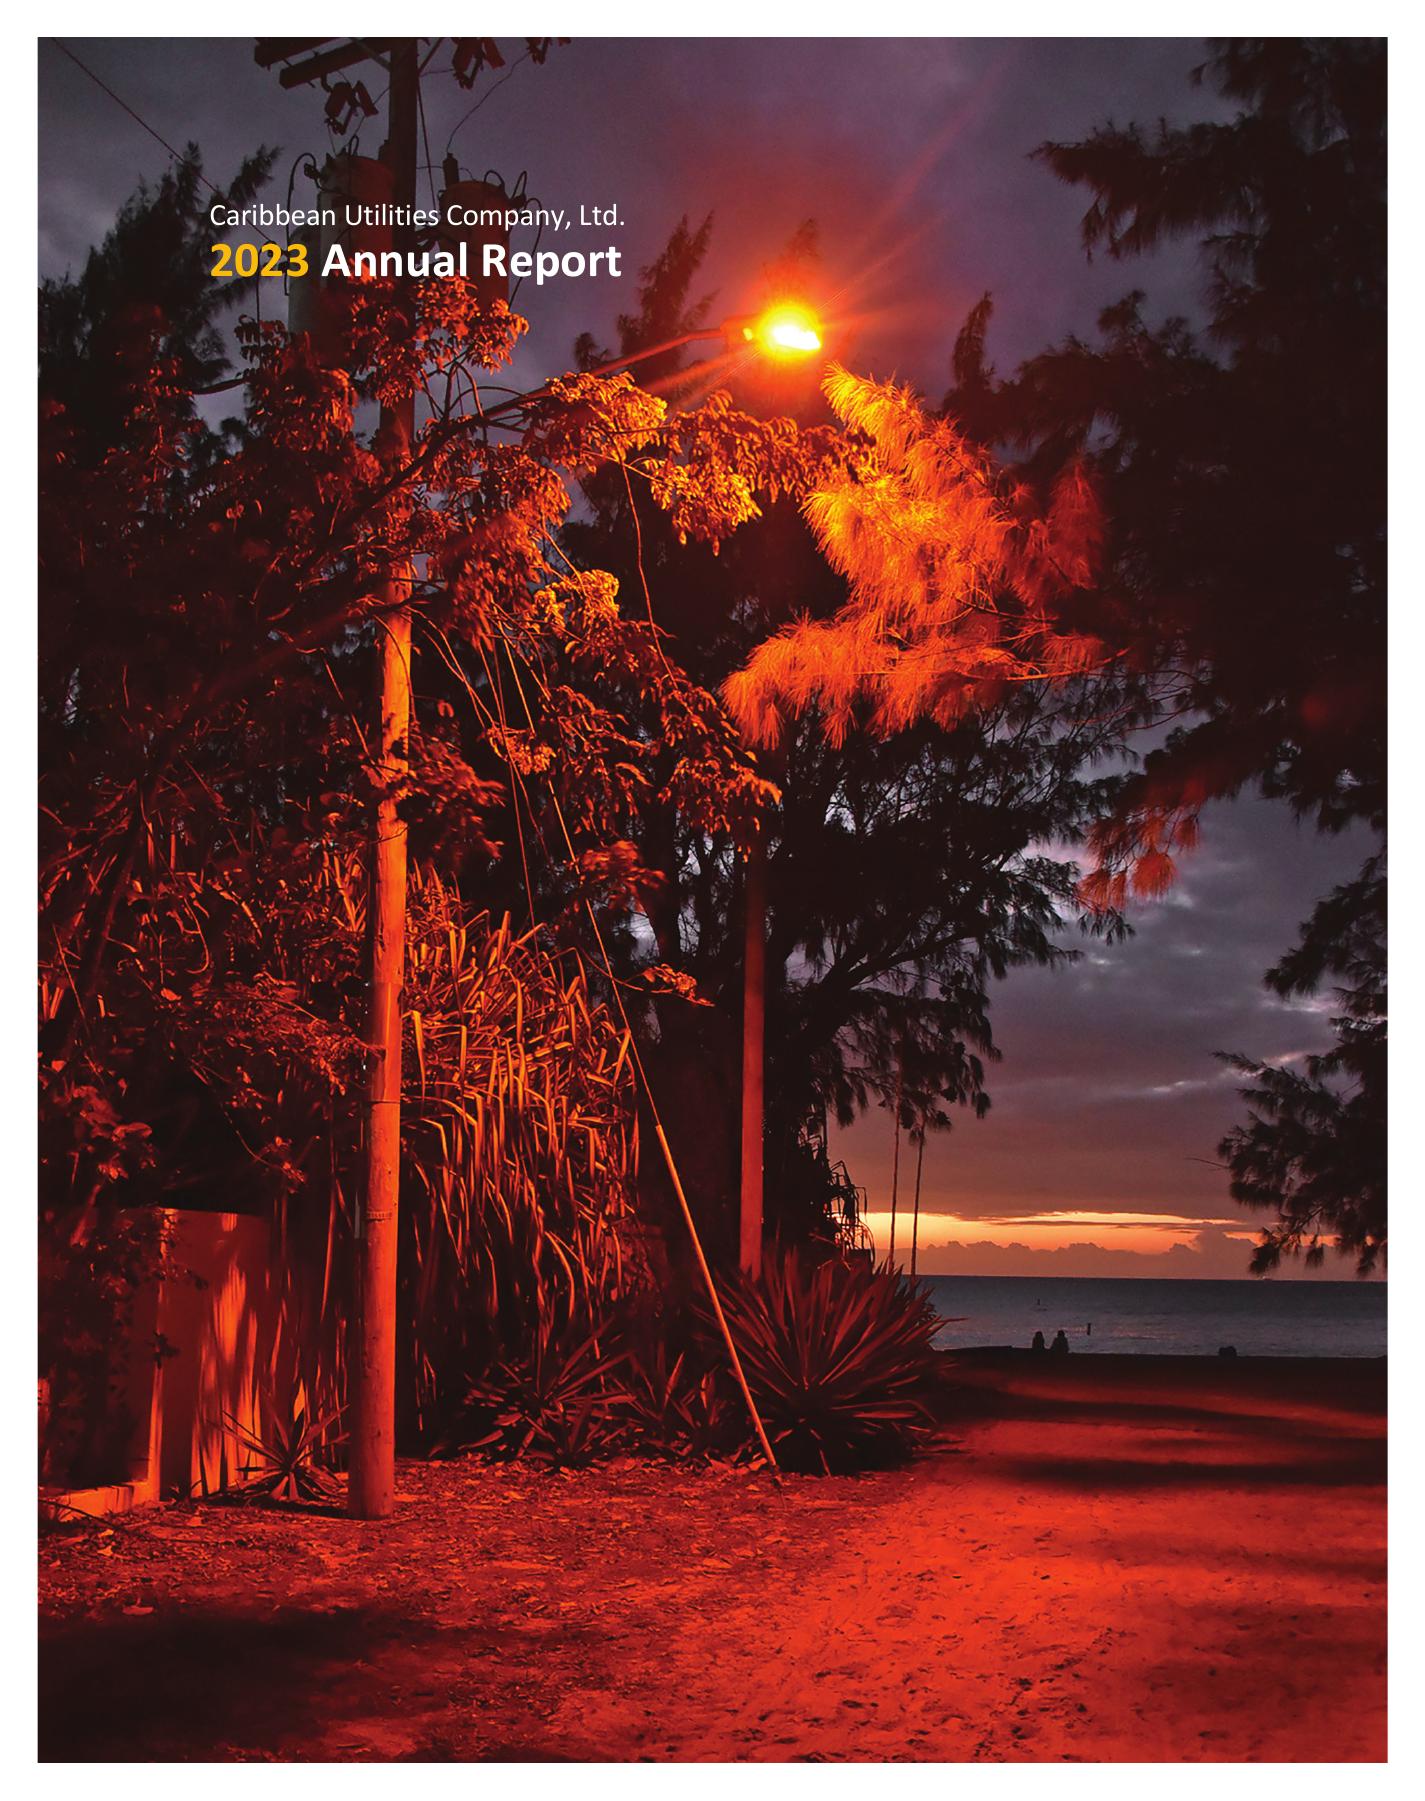 CUC-CAYMAN 2023 Annual Report